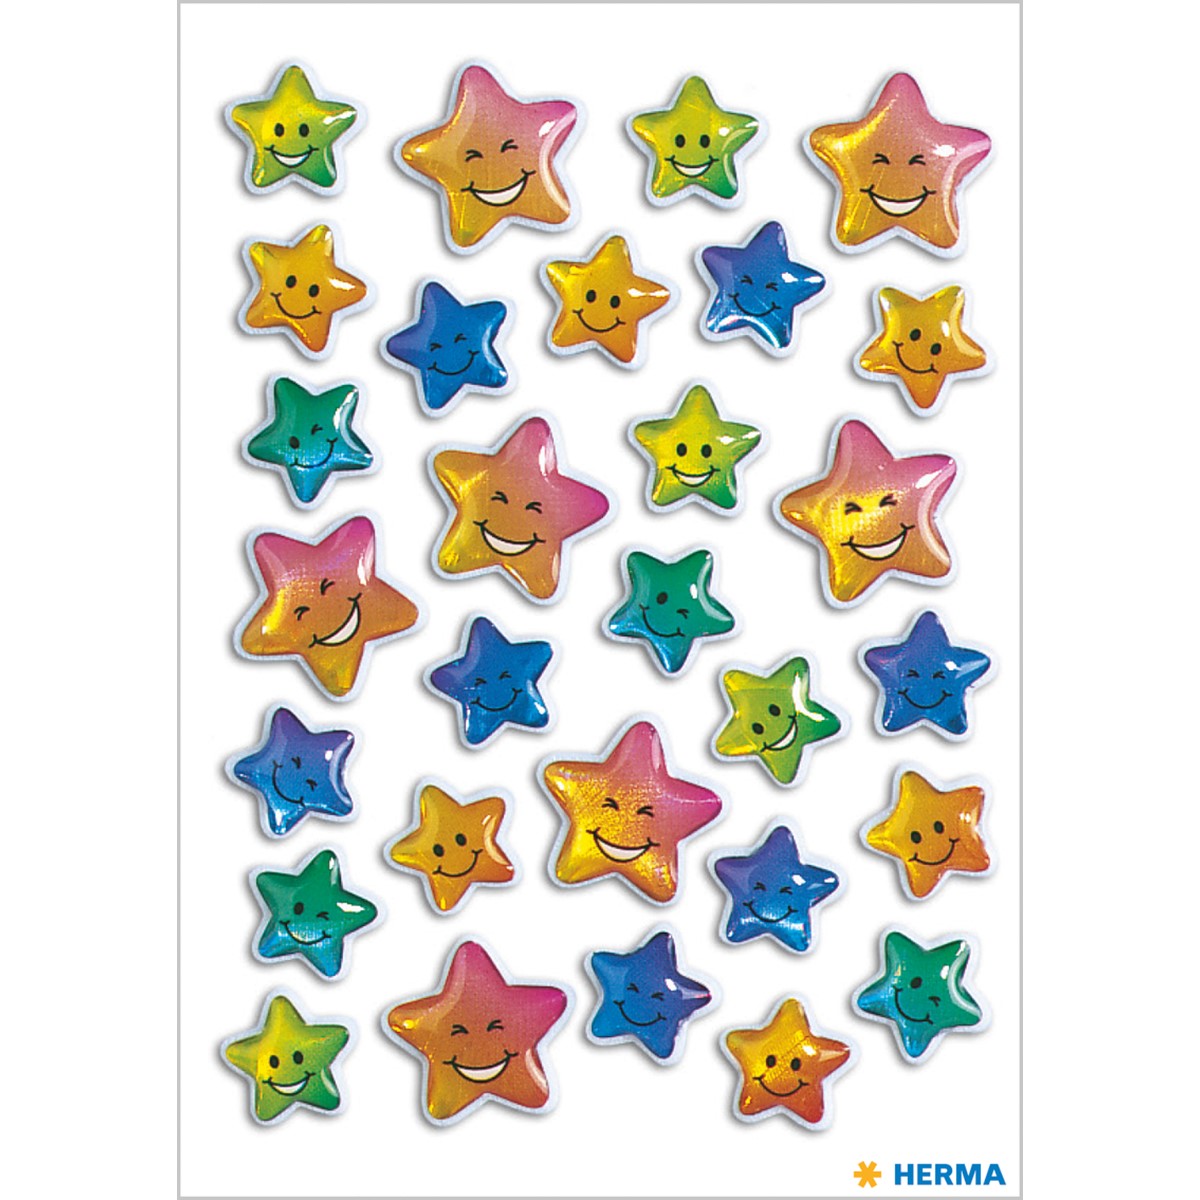 Sticker-Sterne bunt, per Pkg.